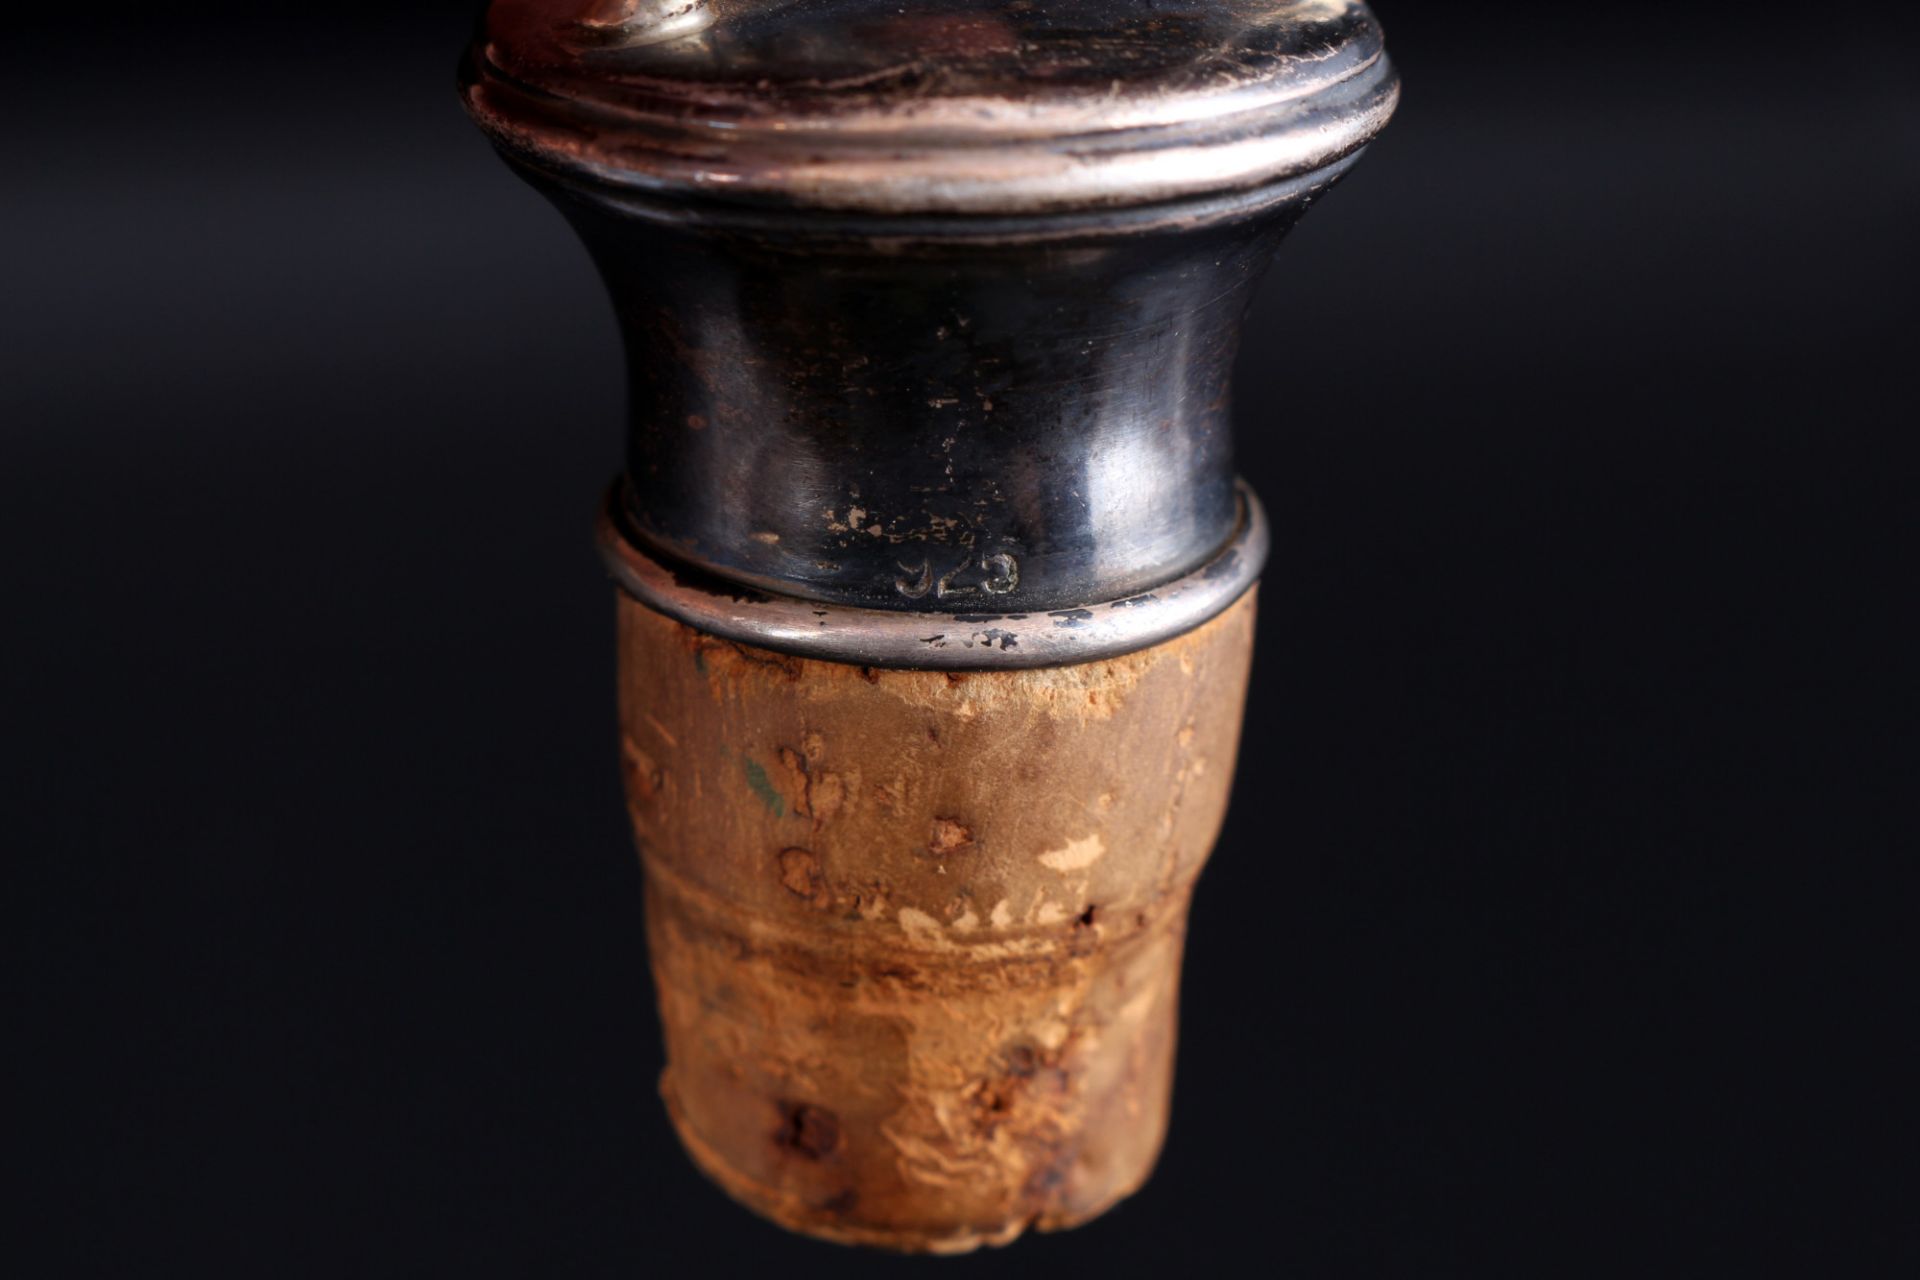 925 silver bottle cork as a horse, 925 Silber Pferd - Flaschenkorken, - Image 5 of 5